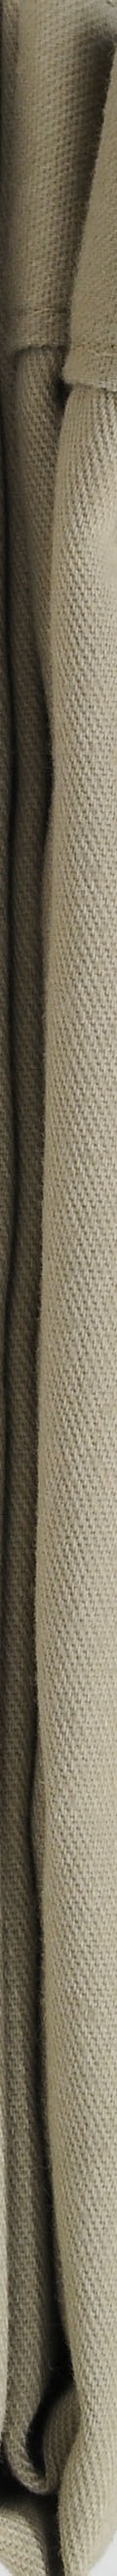 Men's Flat Front Wrinkle Resistant Pants - image 3 of 4